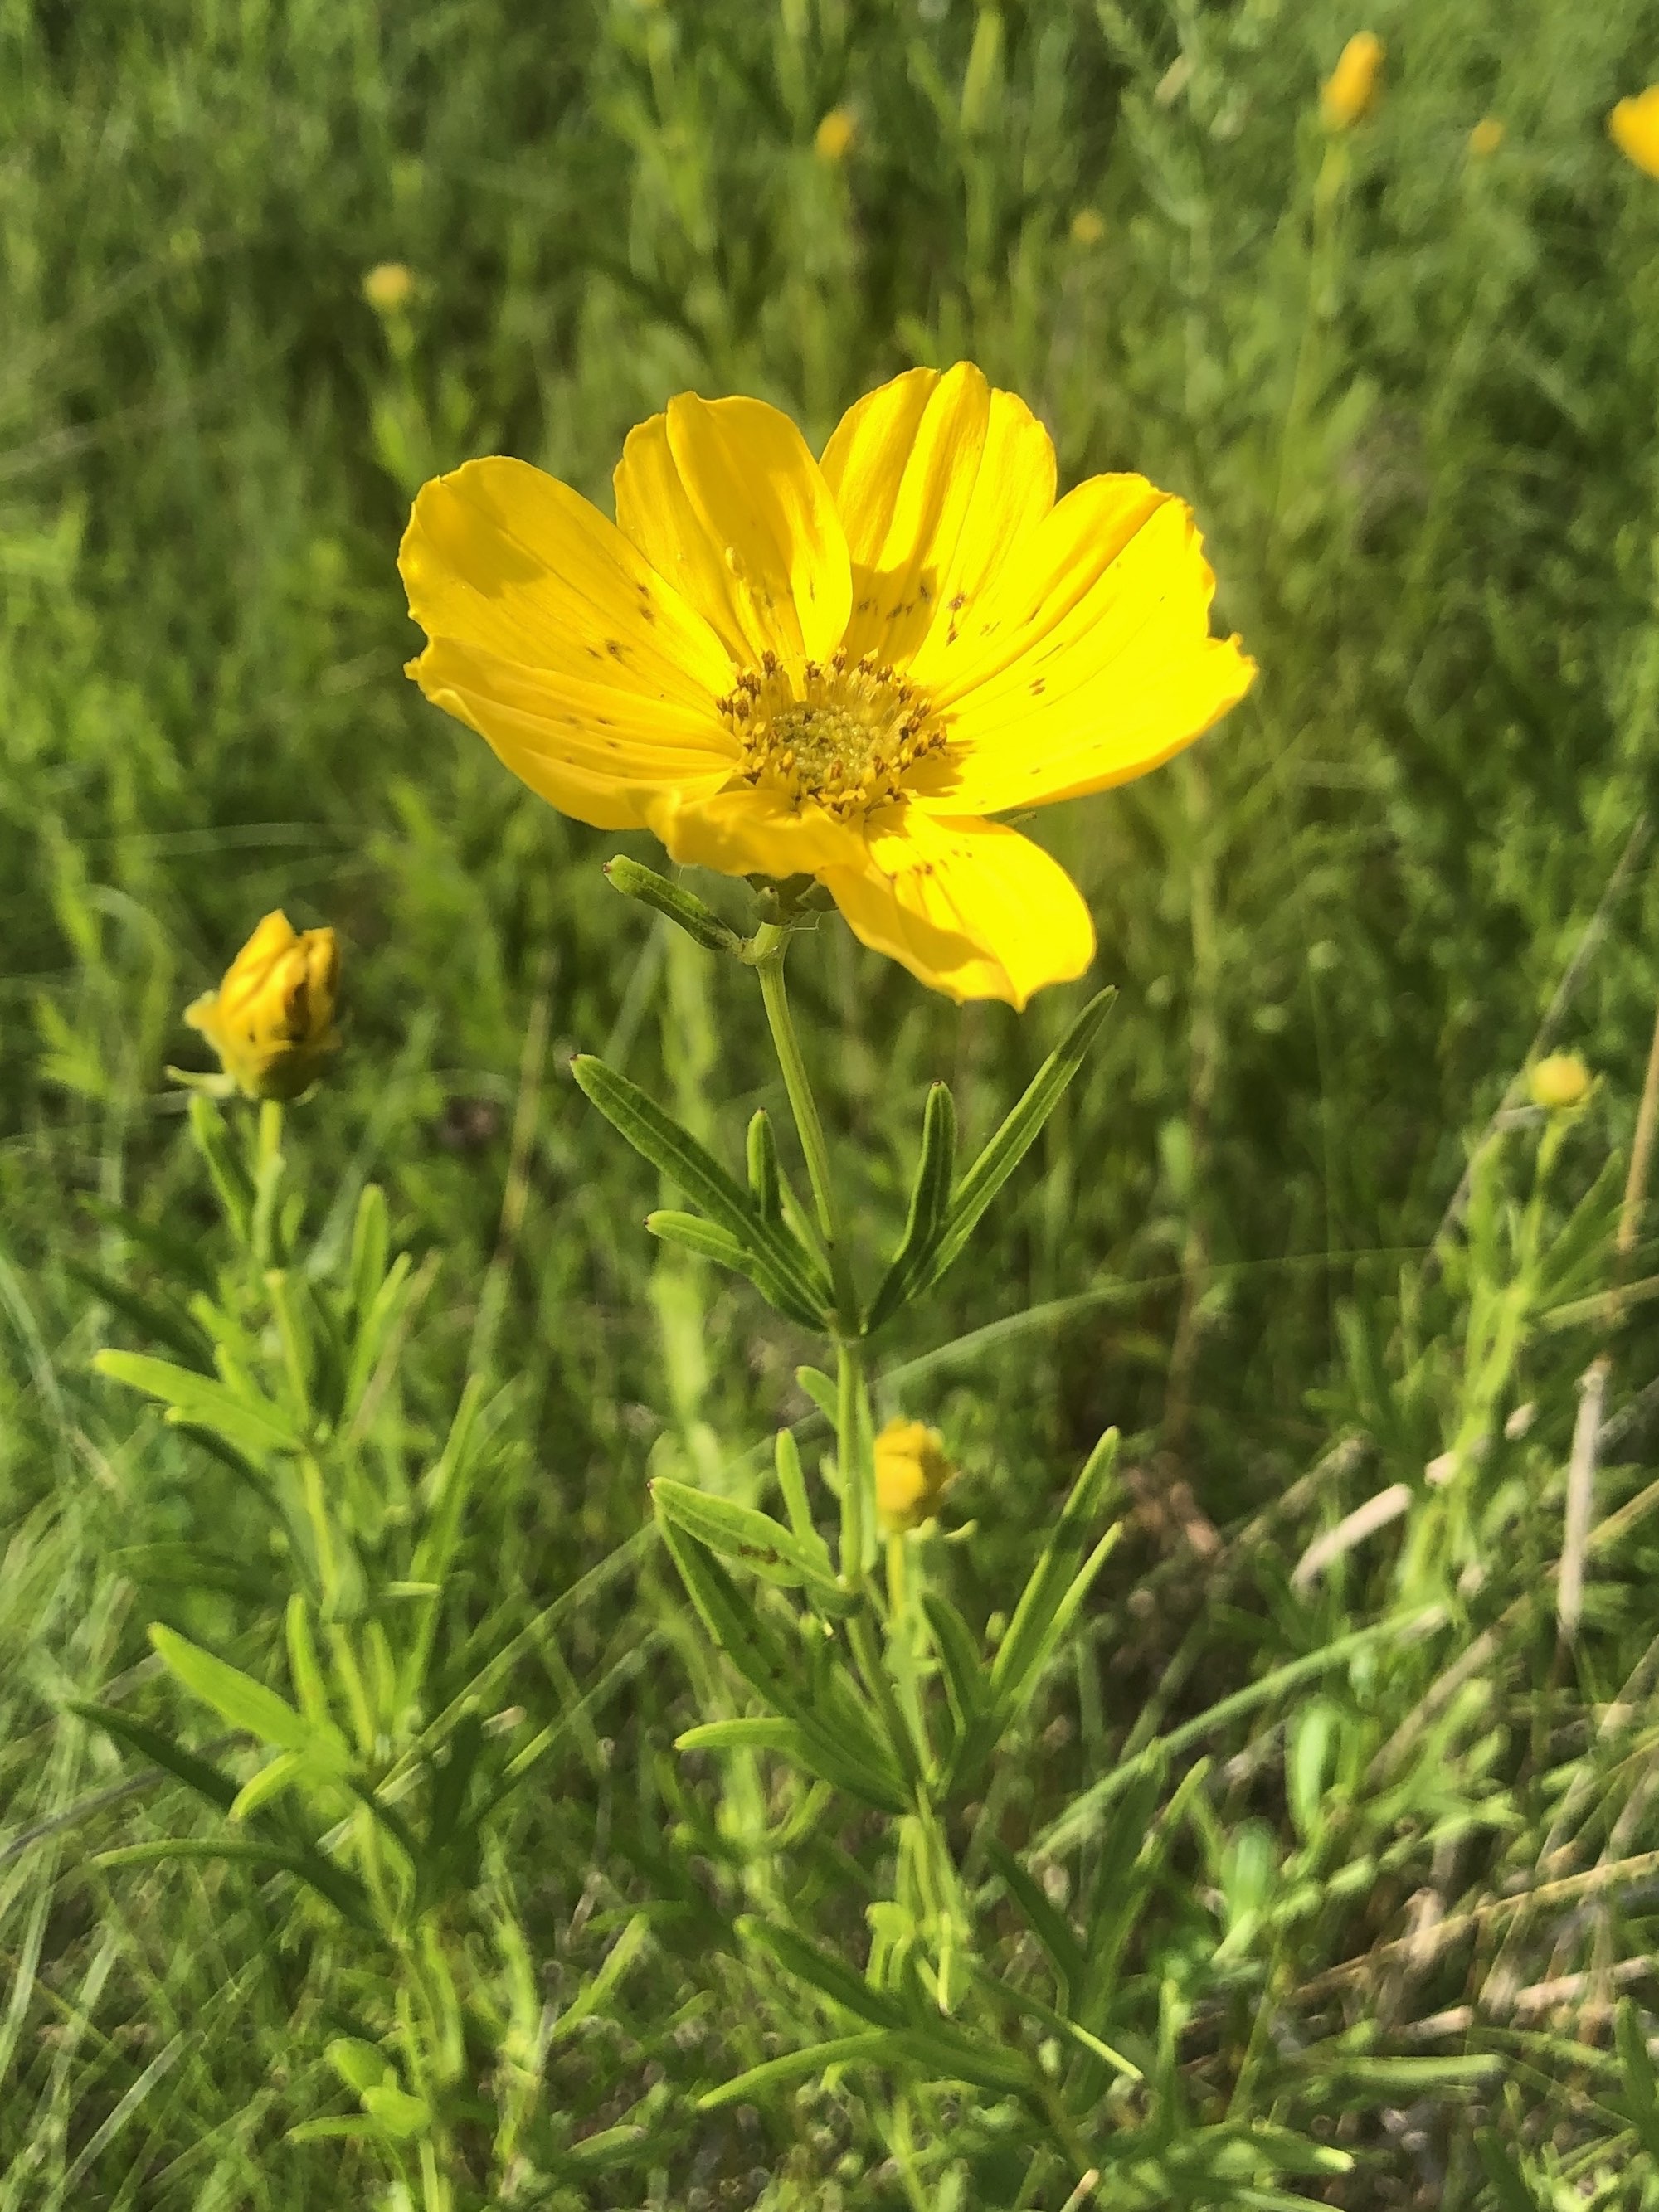 Prairie Coreopsis in UW Arboretum near Visitors Center in Madison, Wisconsin on July 1, 2020.